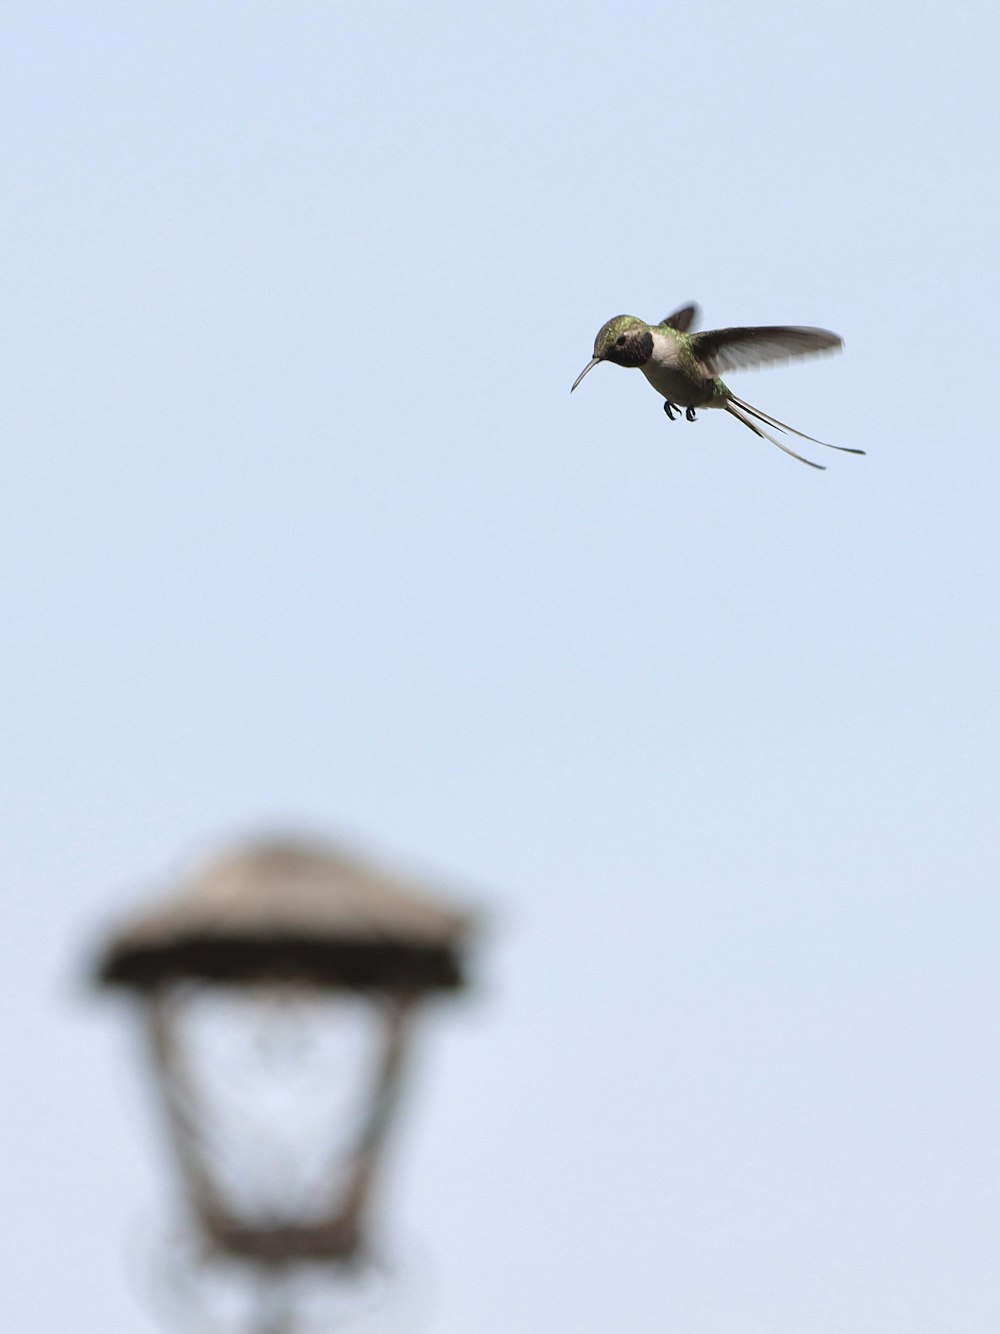 a hummingbird is flying near a light pole